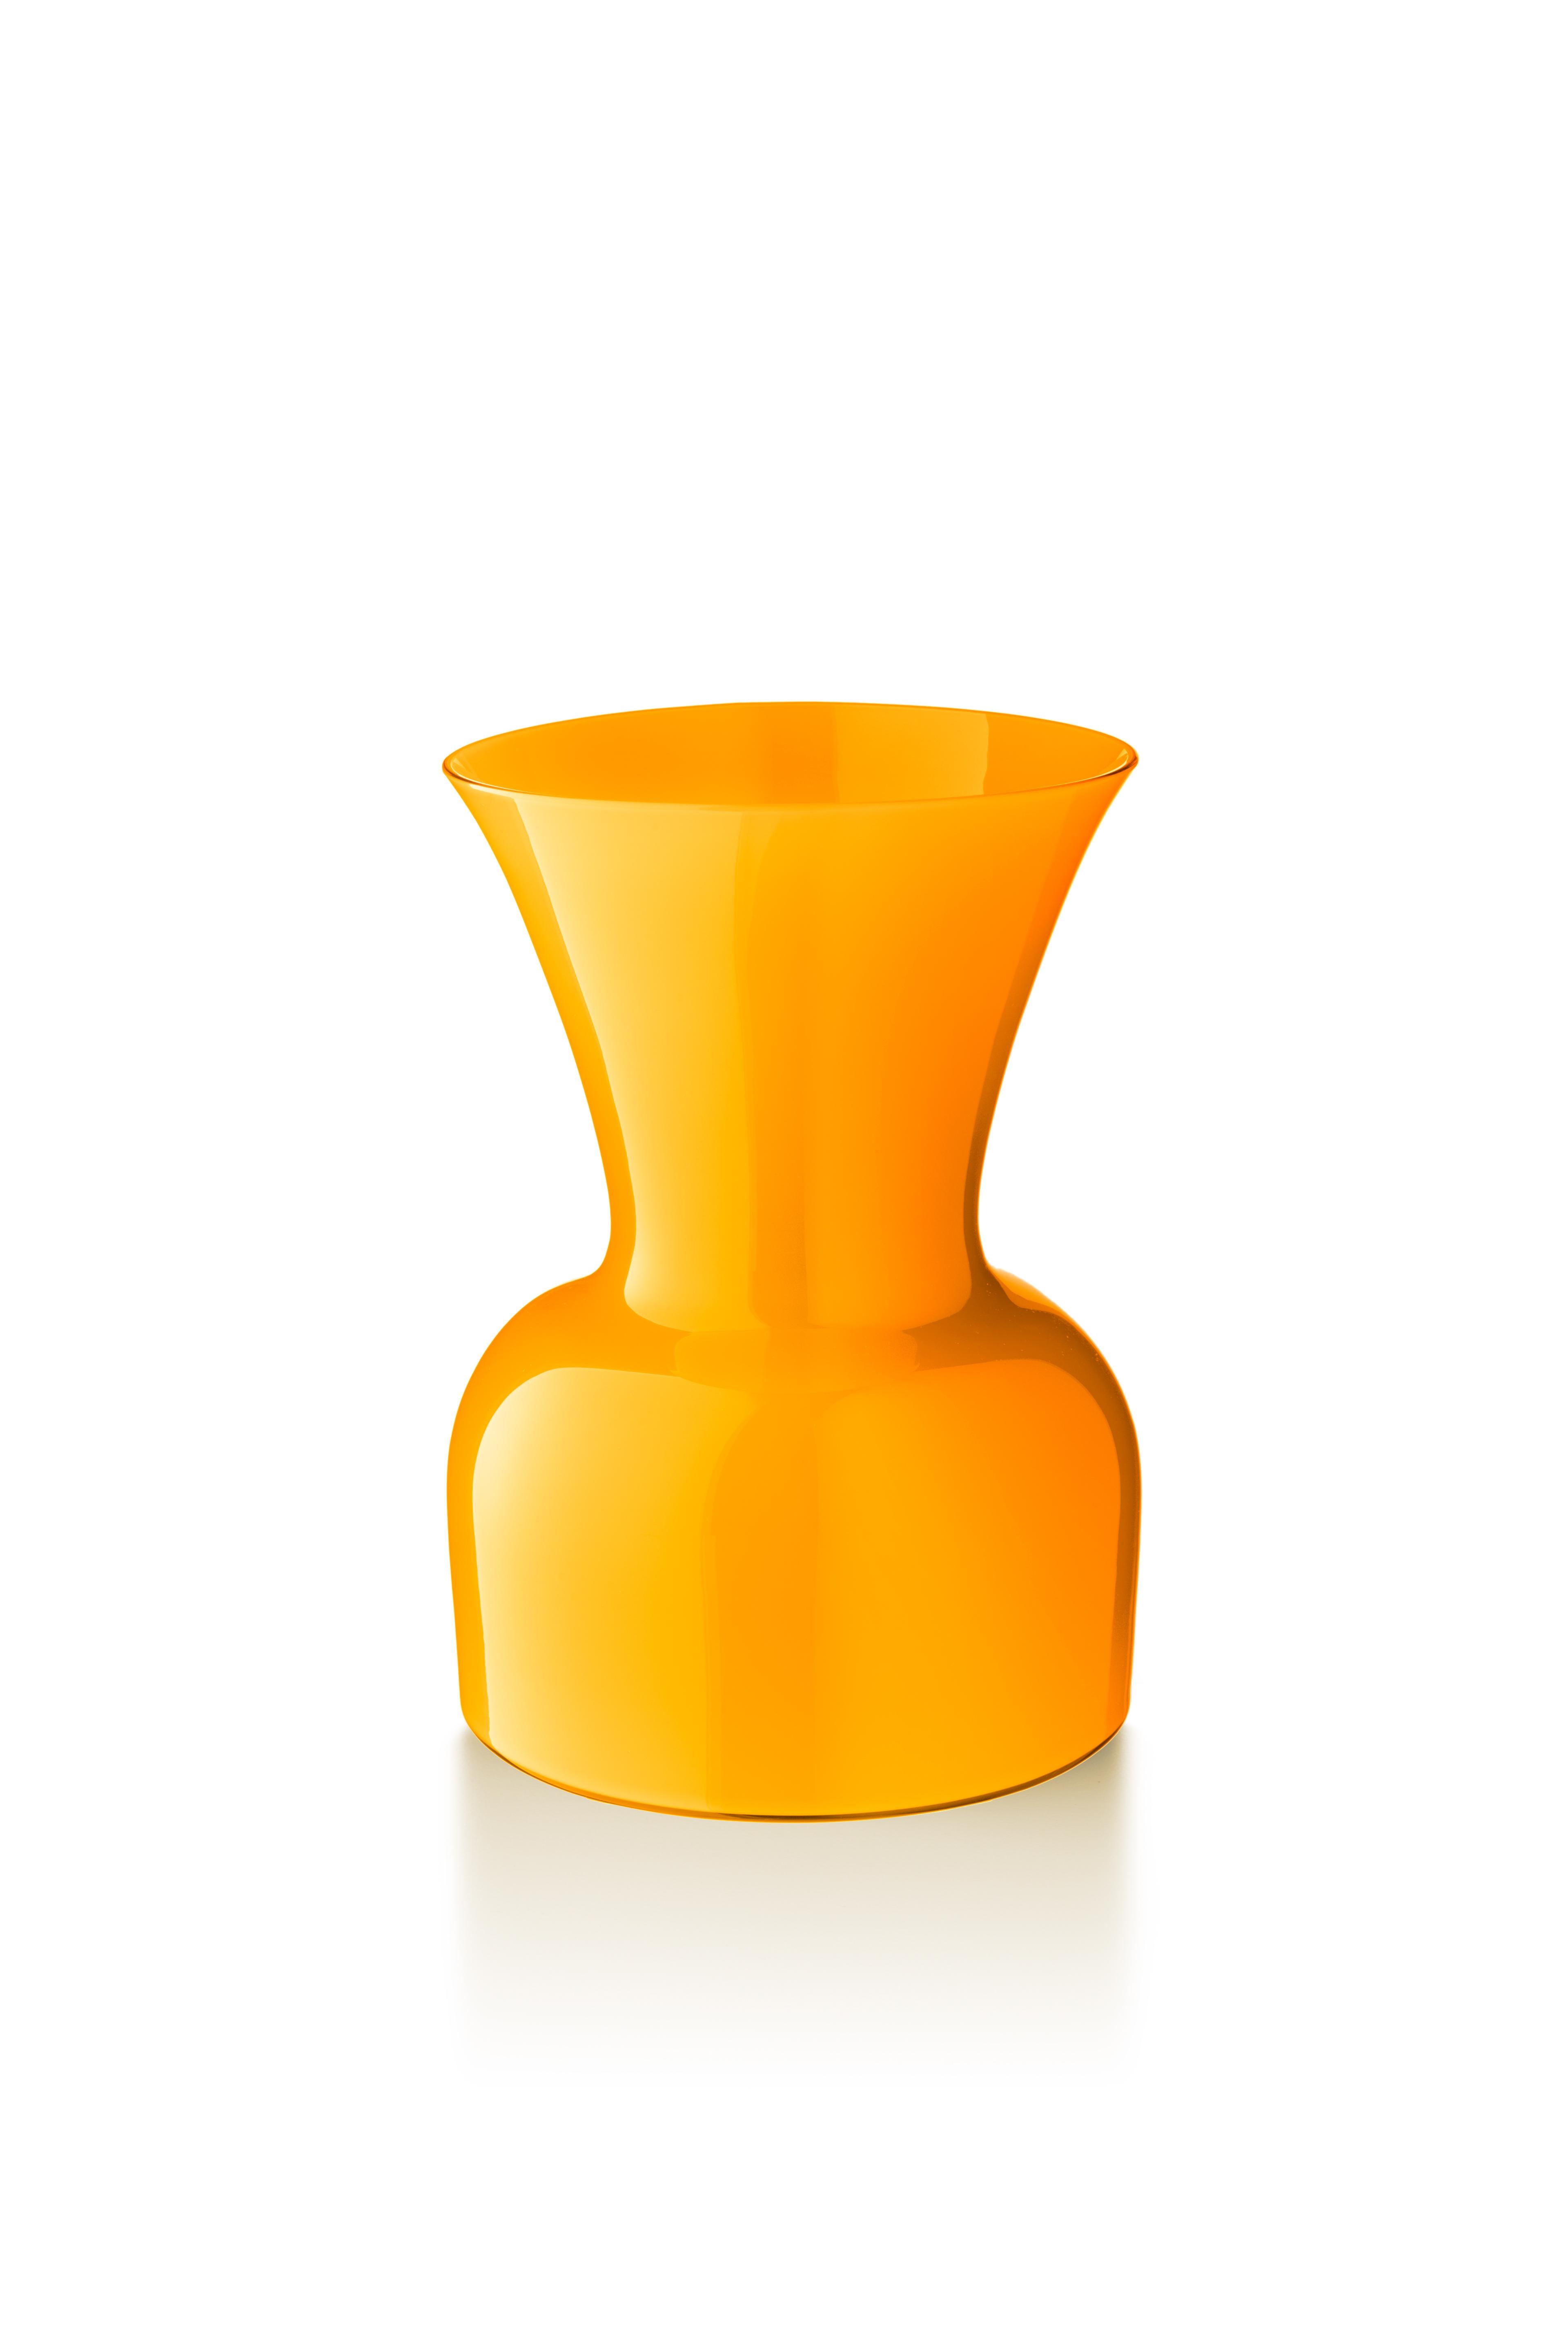 Yellow (10043) Medium Profili Daisy Murano Glass Vase by Anna Gili